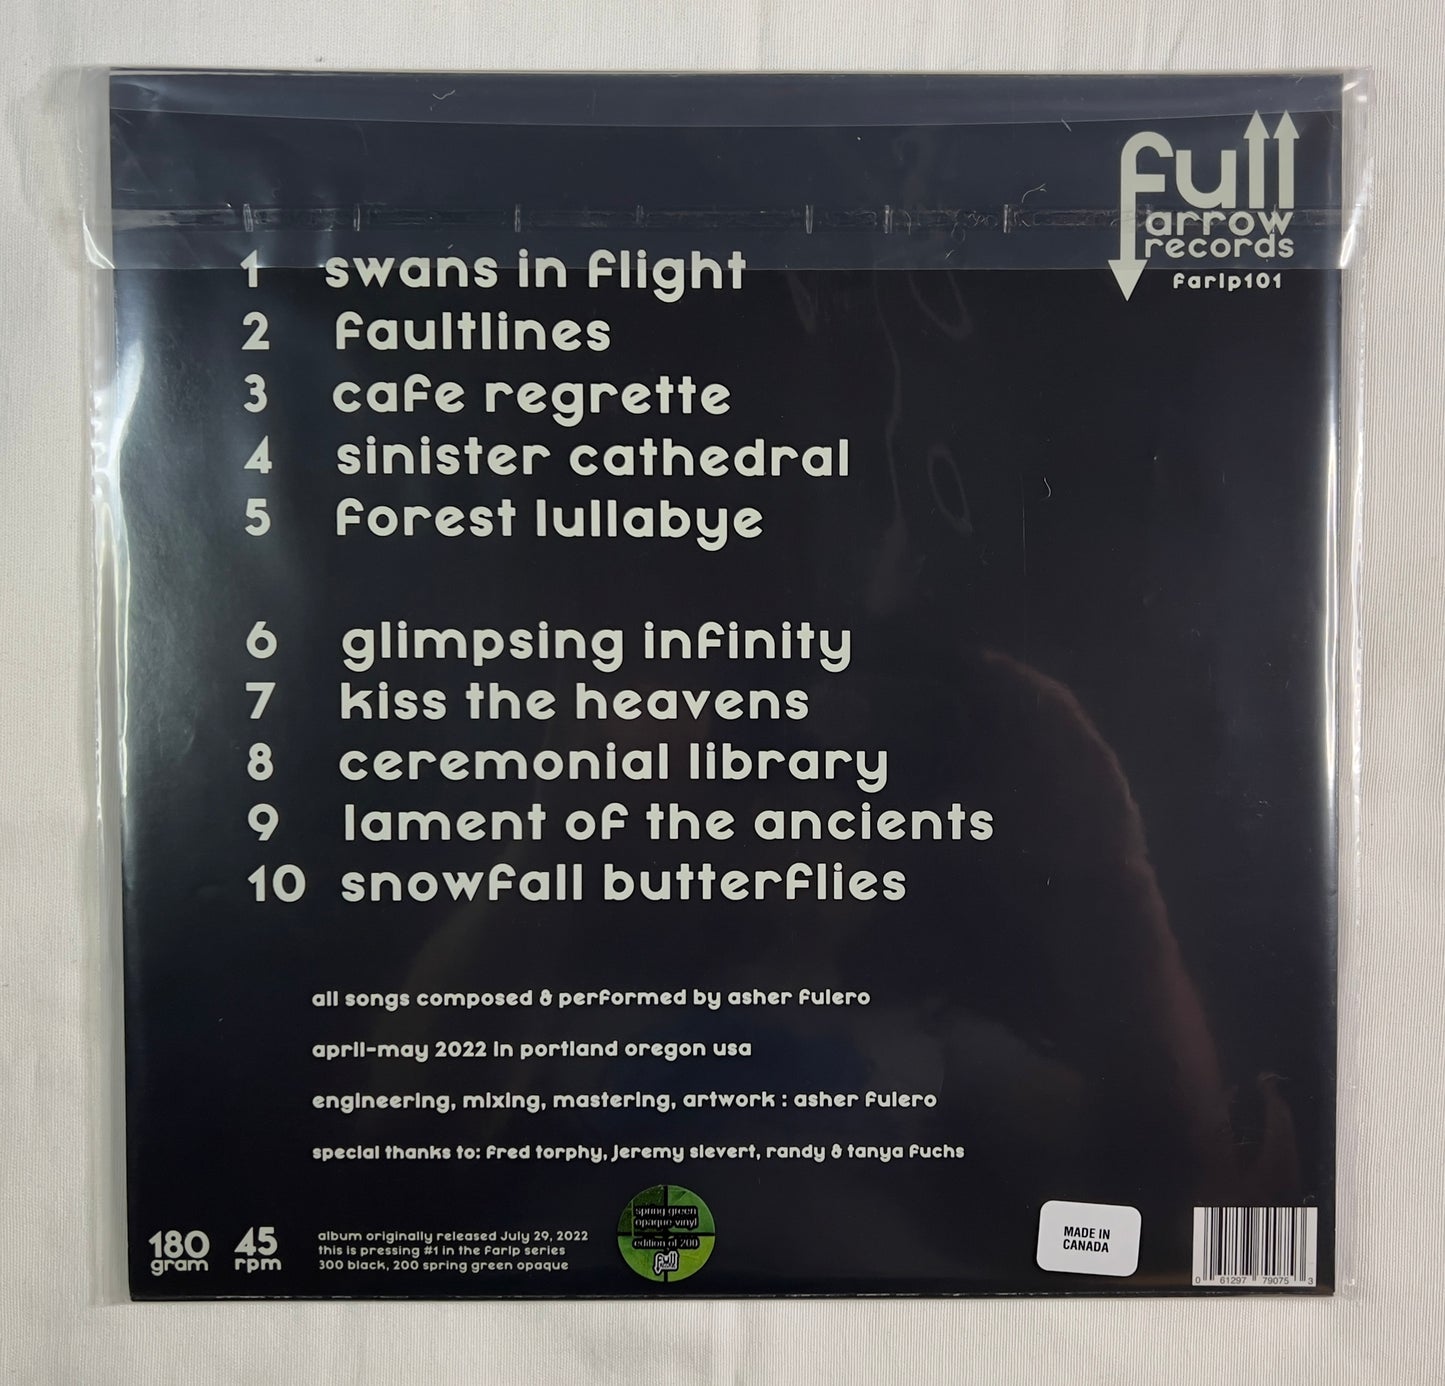 FARLP101 Asher Fulero - Interconnected (Opaque Spring Green Vinyl) 180g